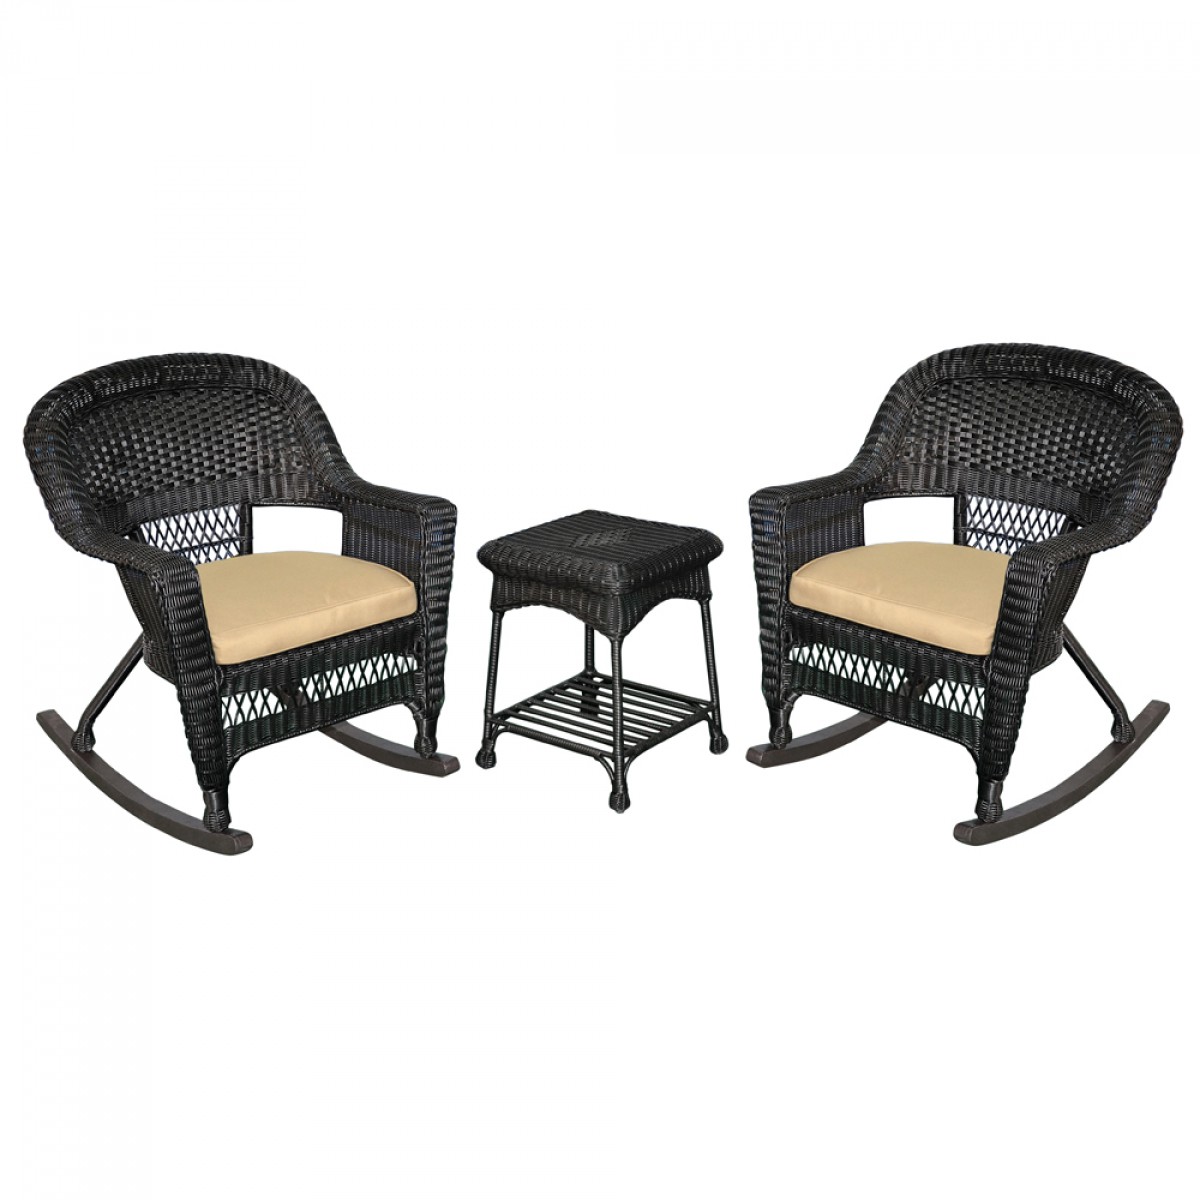 3pc Black Rocker Wicker Chair Set With Tan Cushion